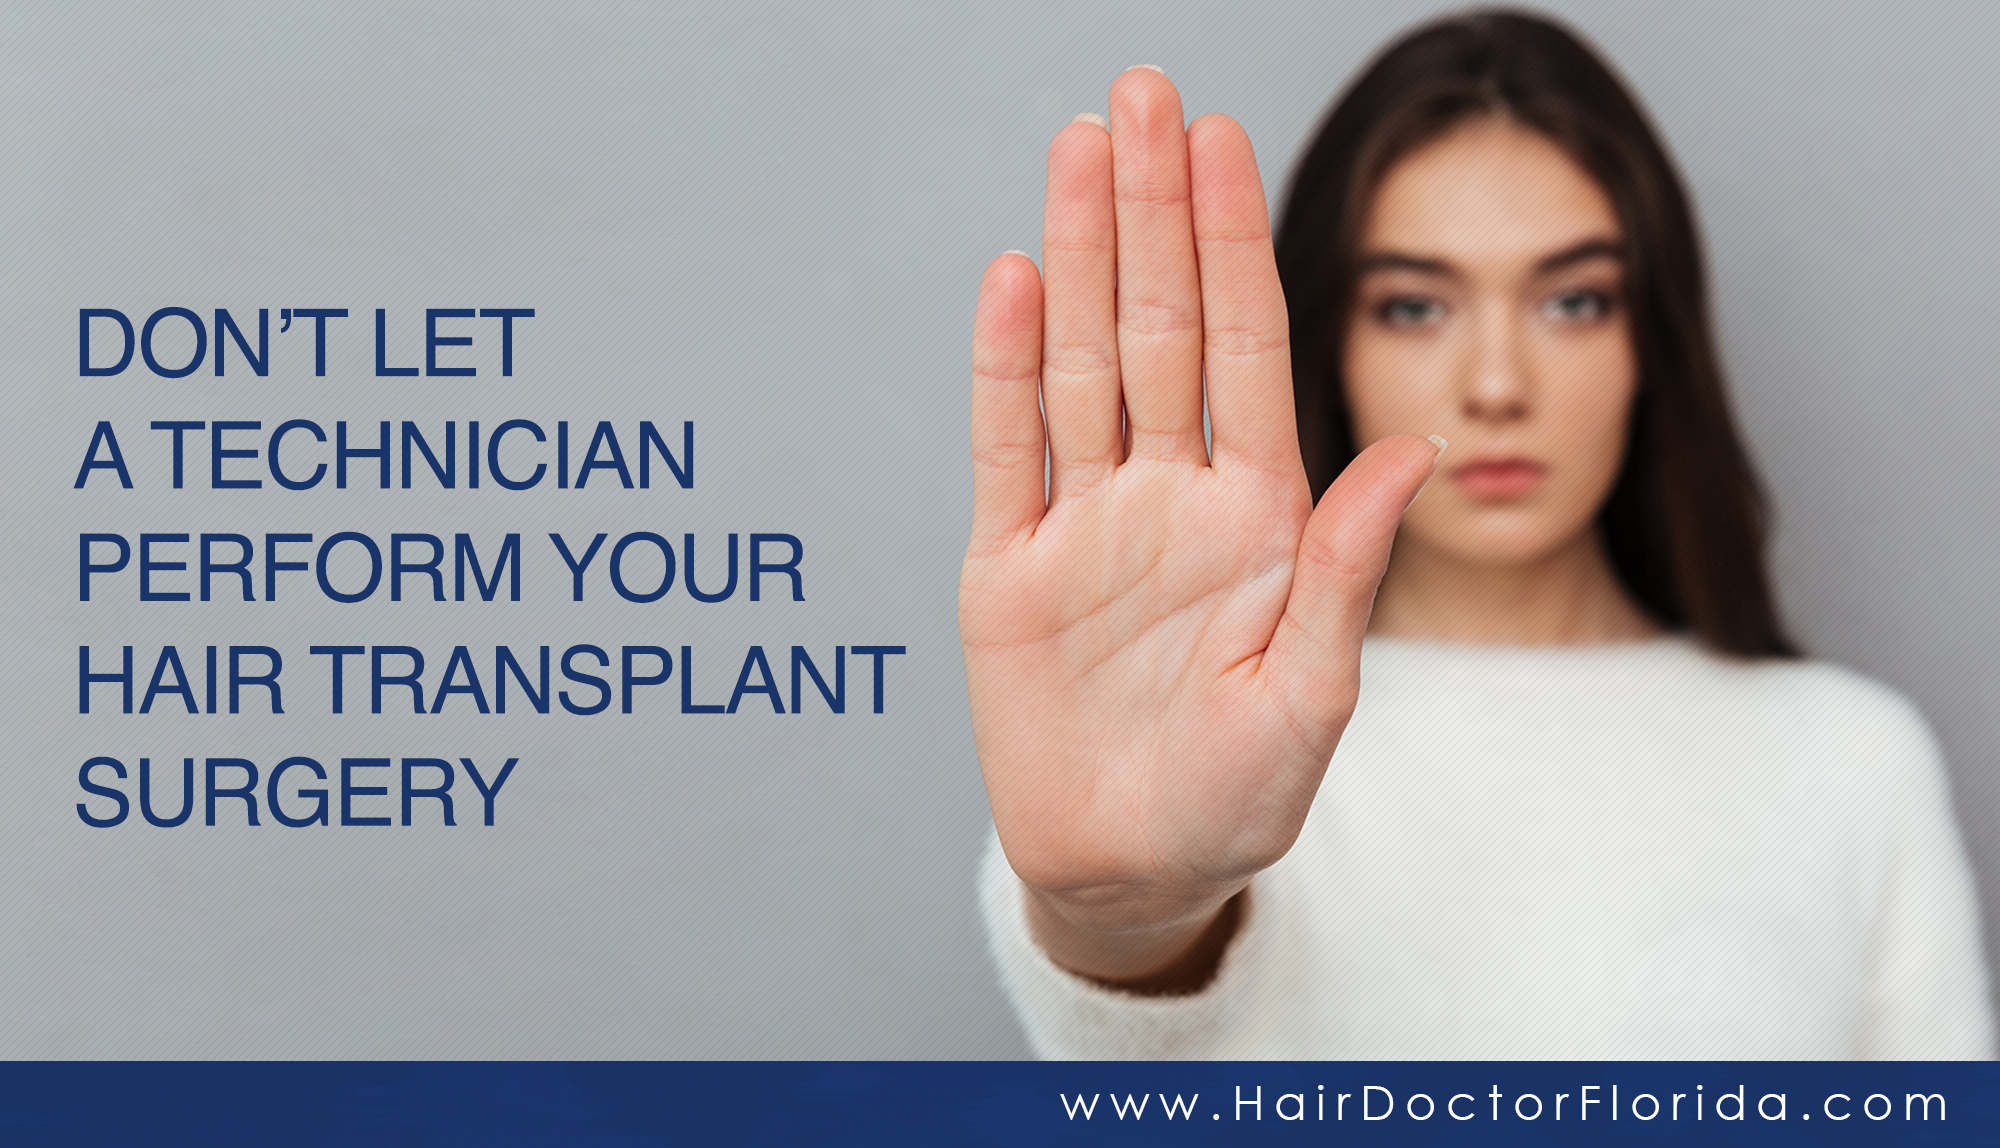 Don't Let a Technician Perform Your Hair Transplant Surgery - Tempus Hair